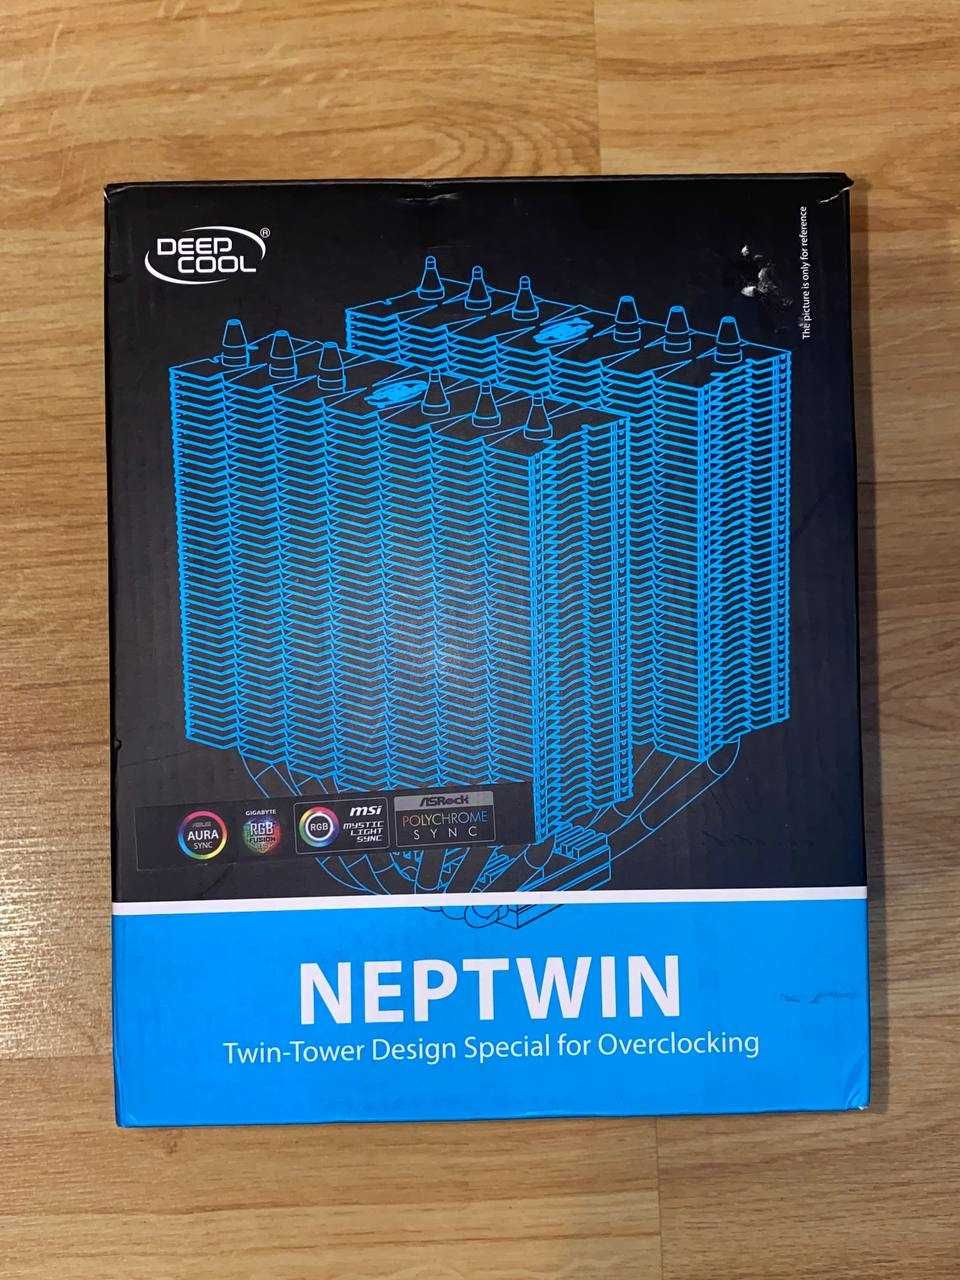 Кулер DeepCool Neptwin RGB